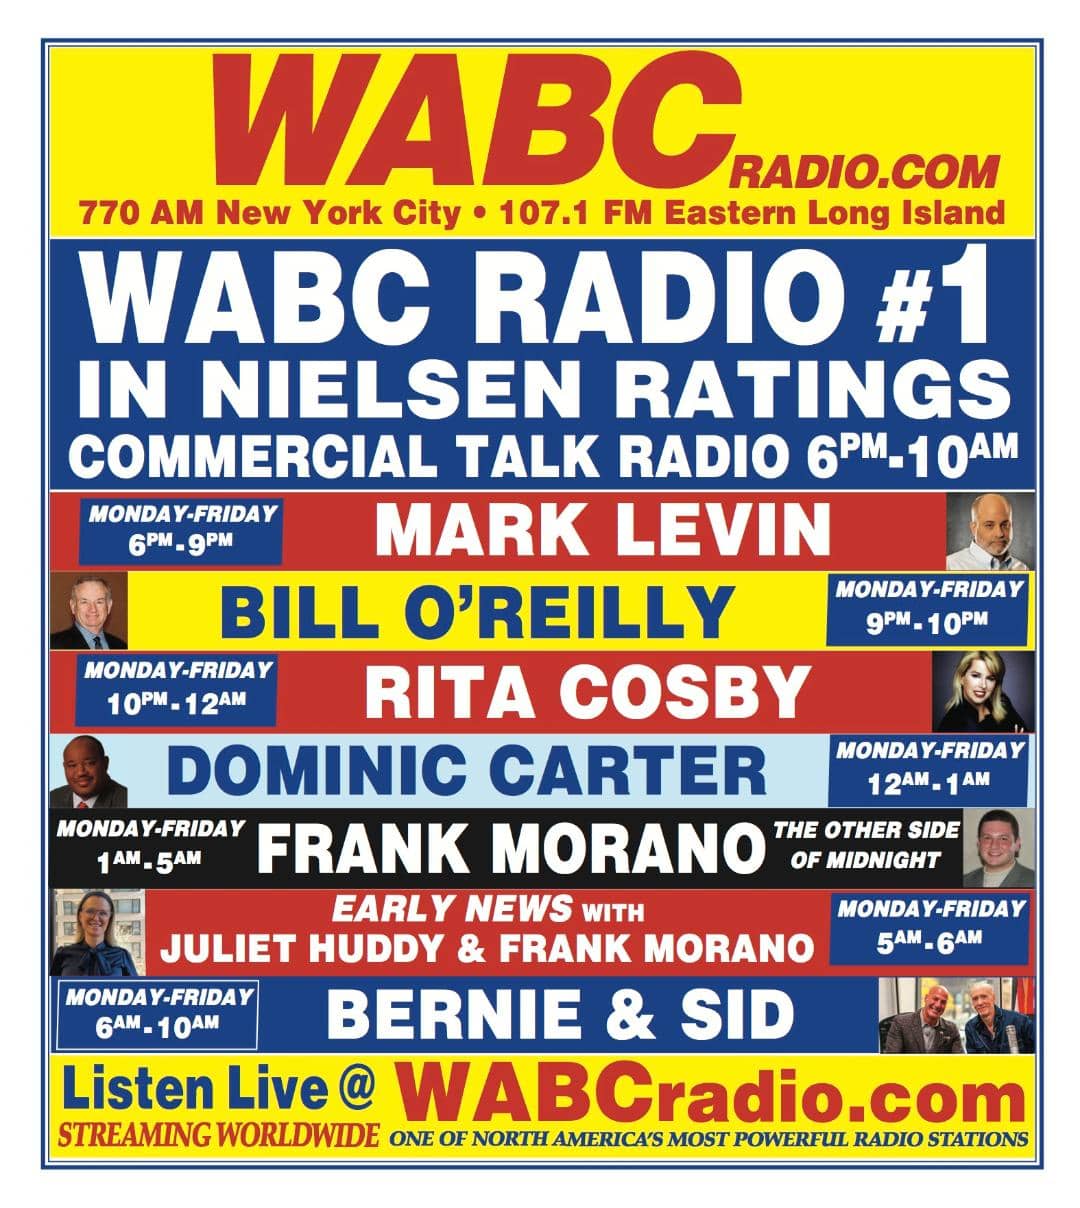 77WABC Radio 1 in Nielsen Ratings for Talk Radio 77 WABC